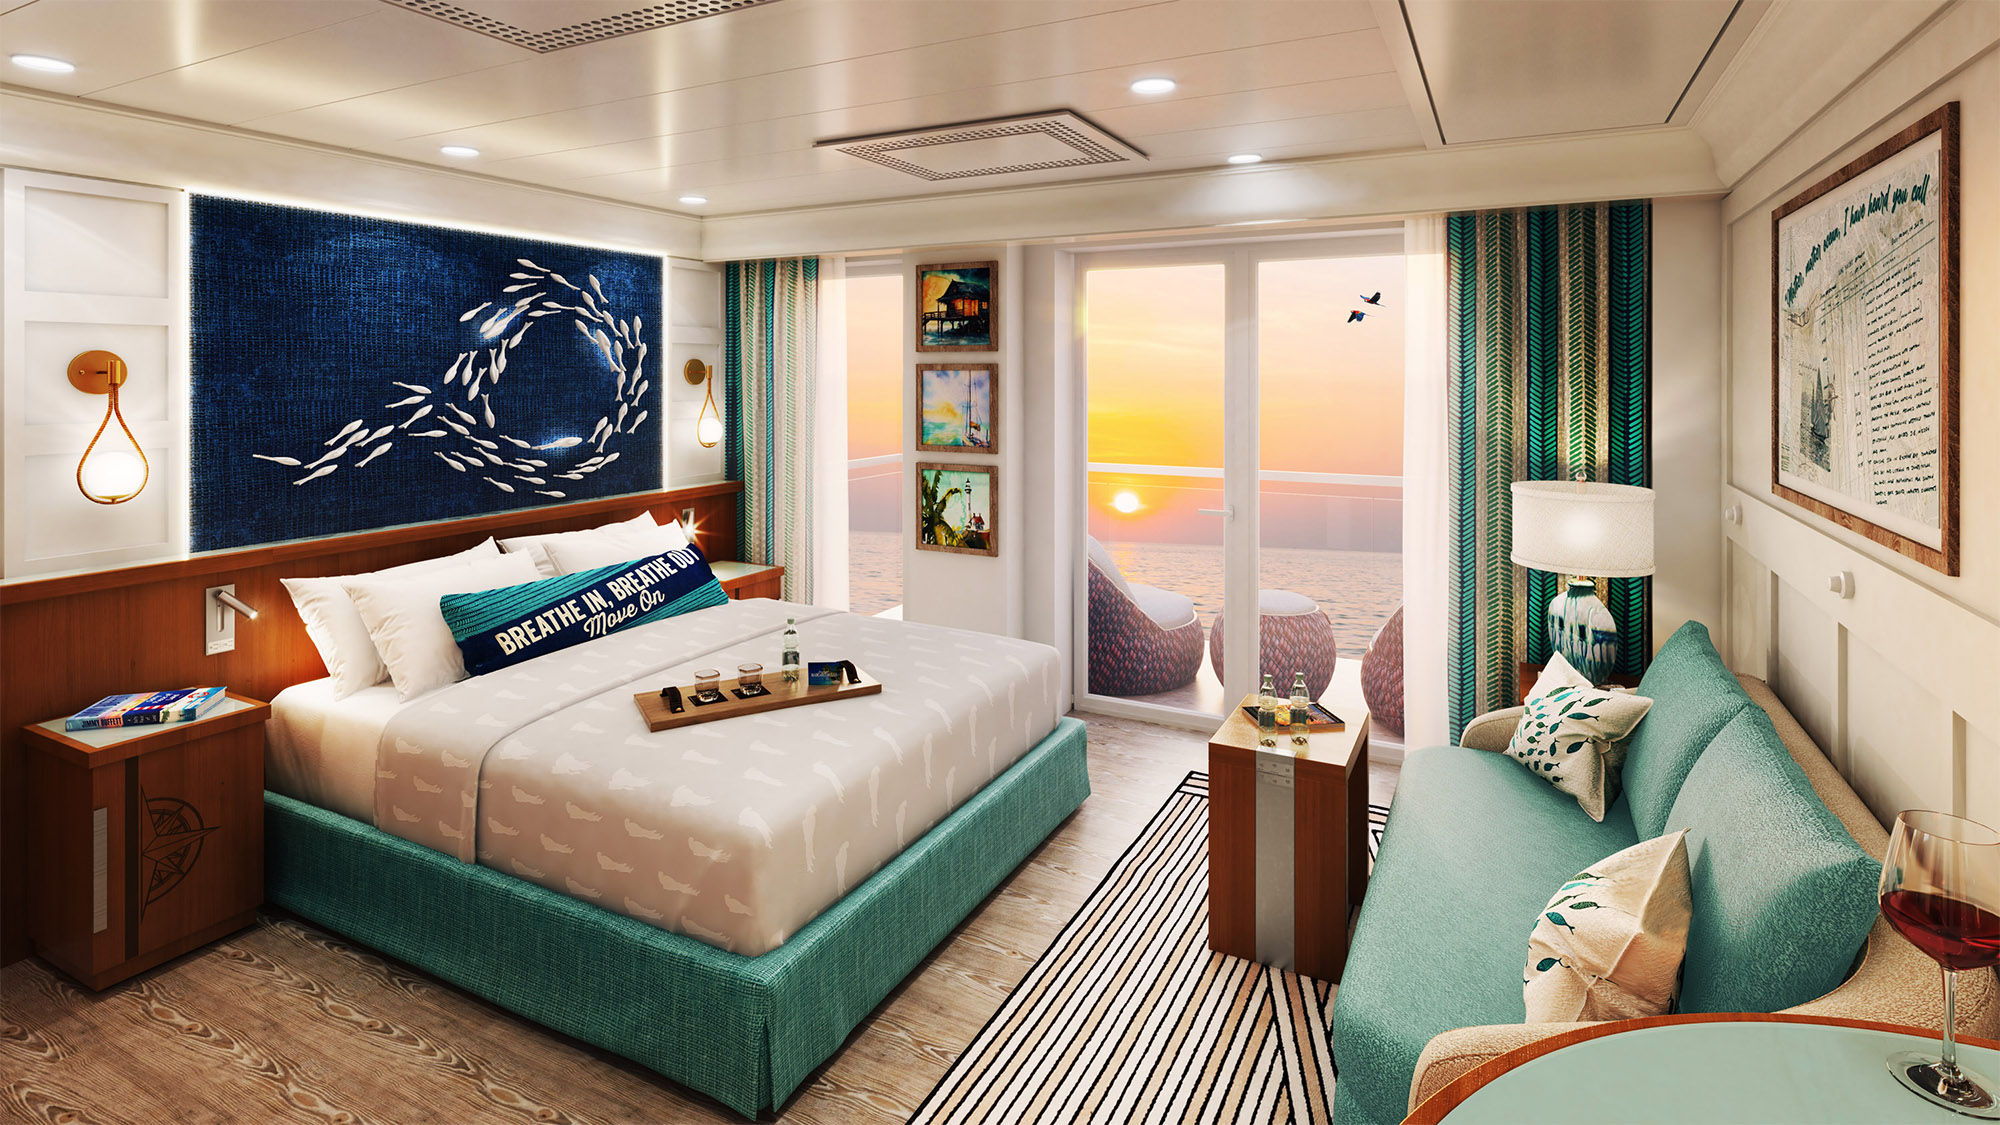 The Margaritaville at Sea Islander will feature Islander Suites.